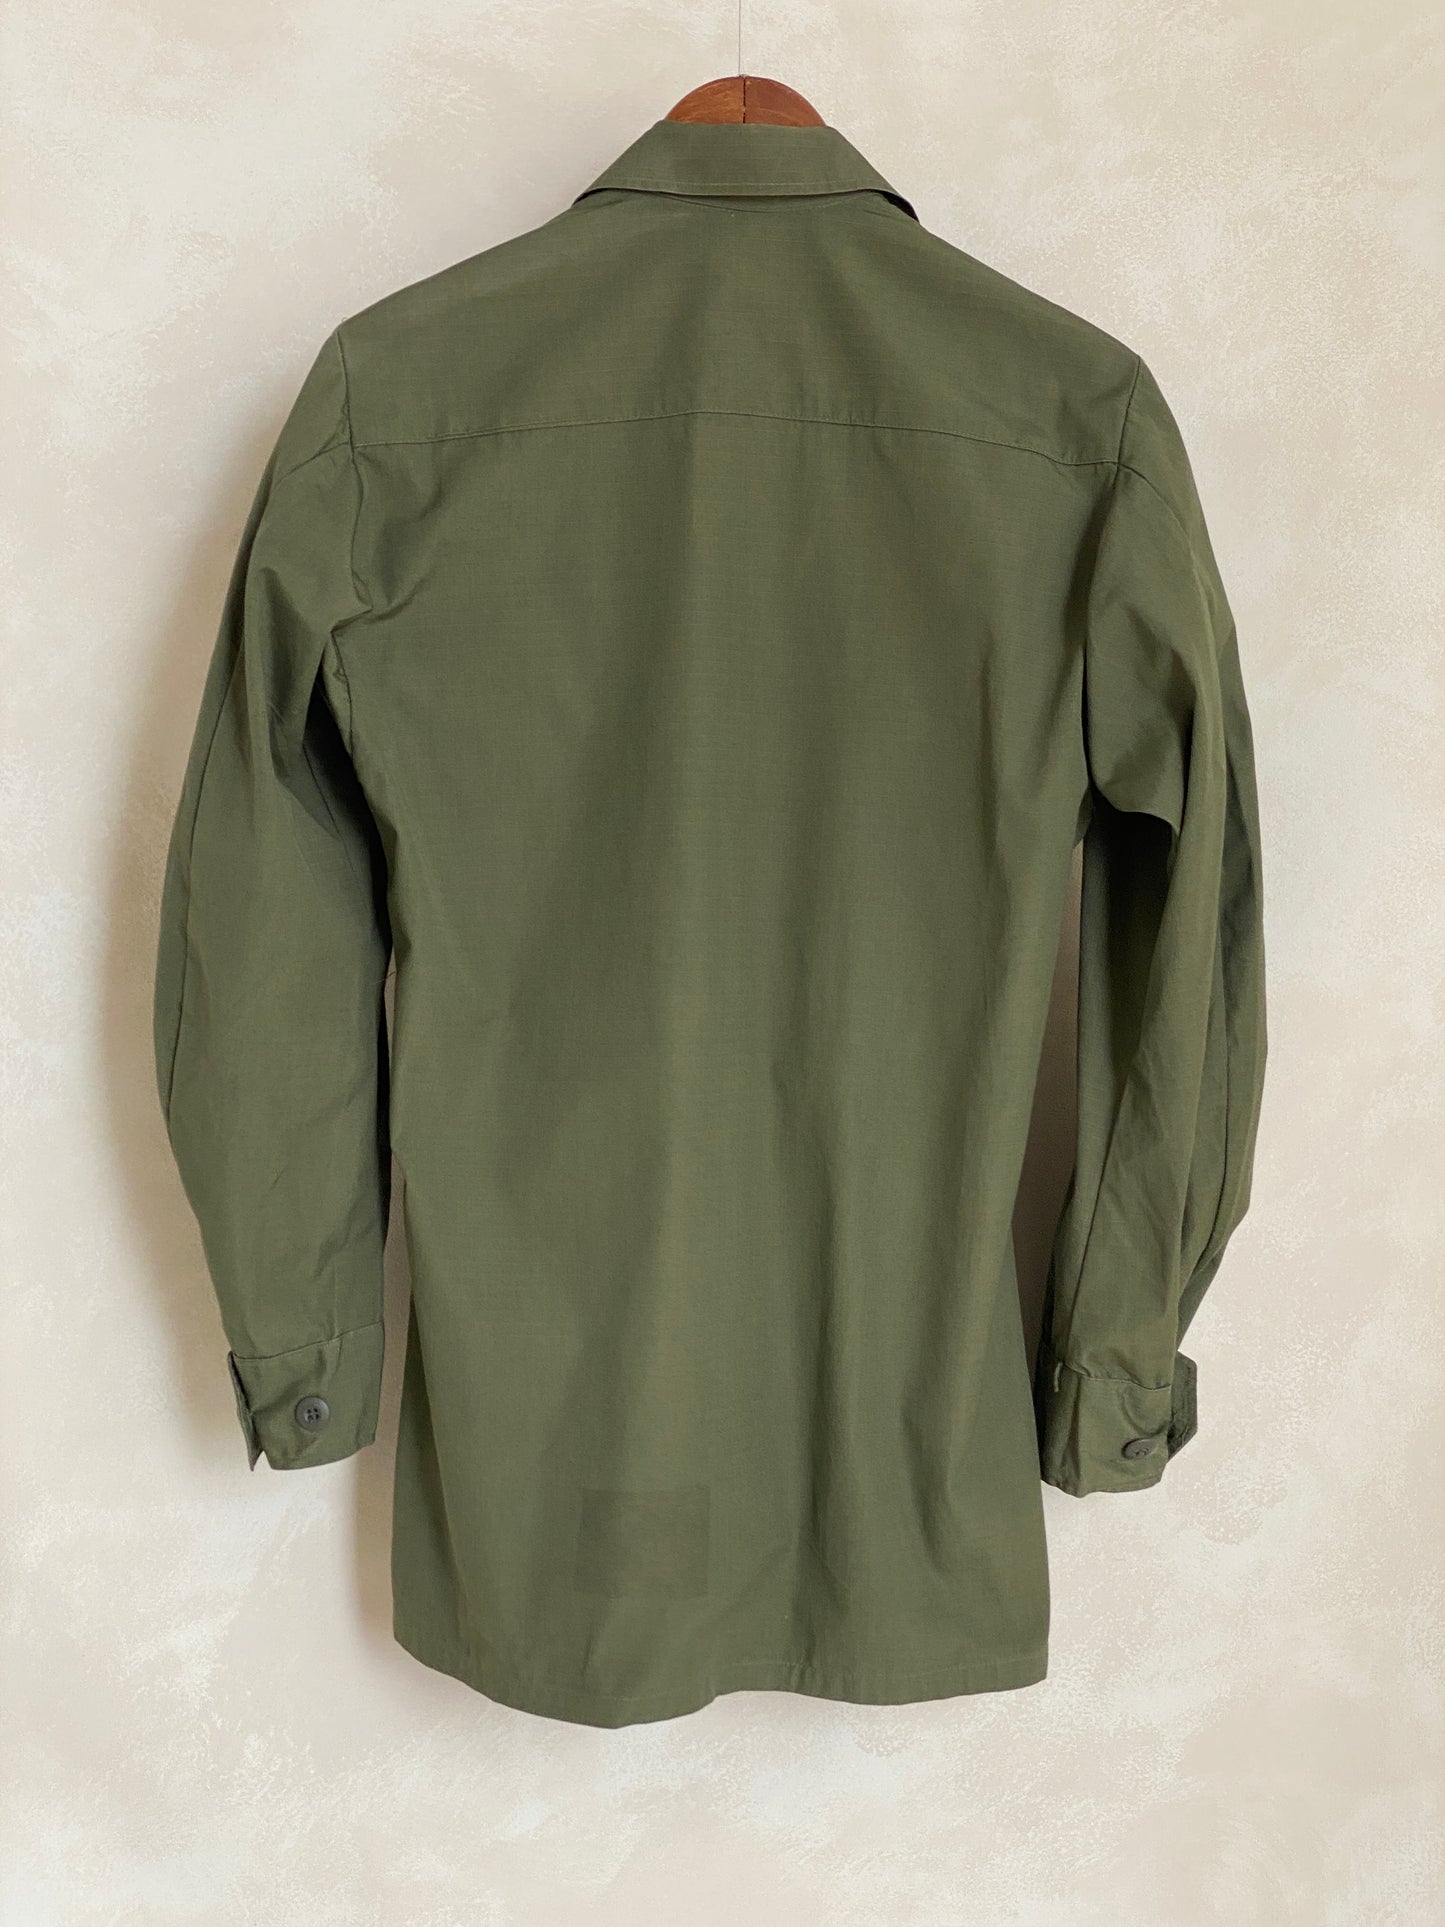 X Small Reg. Authentic 1969 US Army vintage Vietnam jungle jacket.